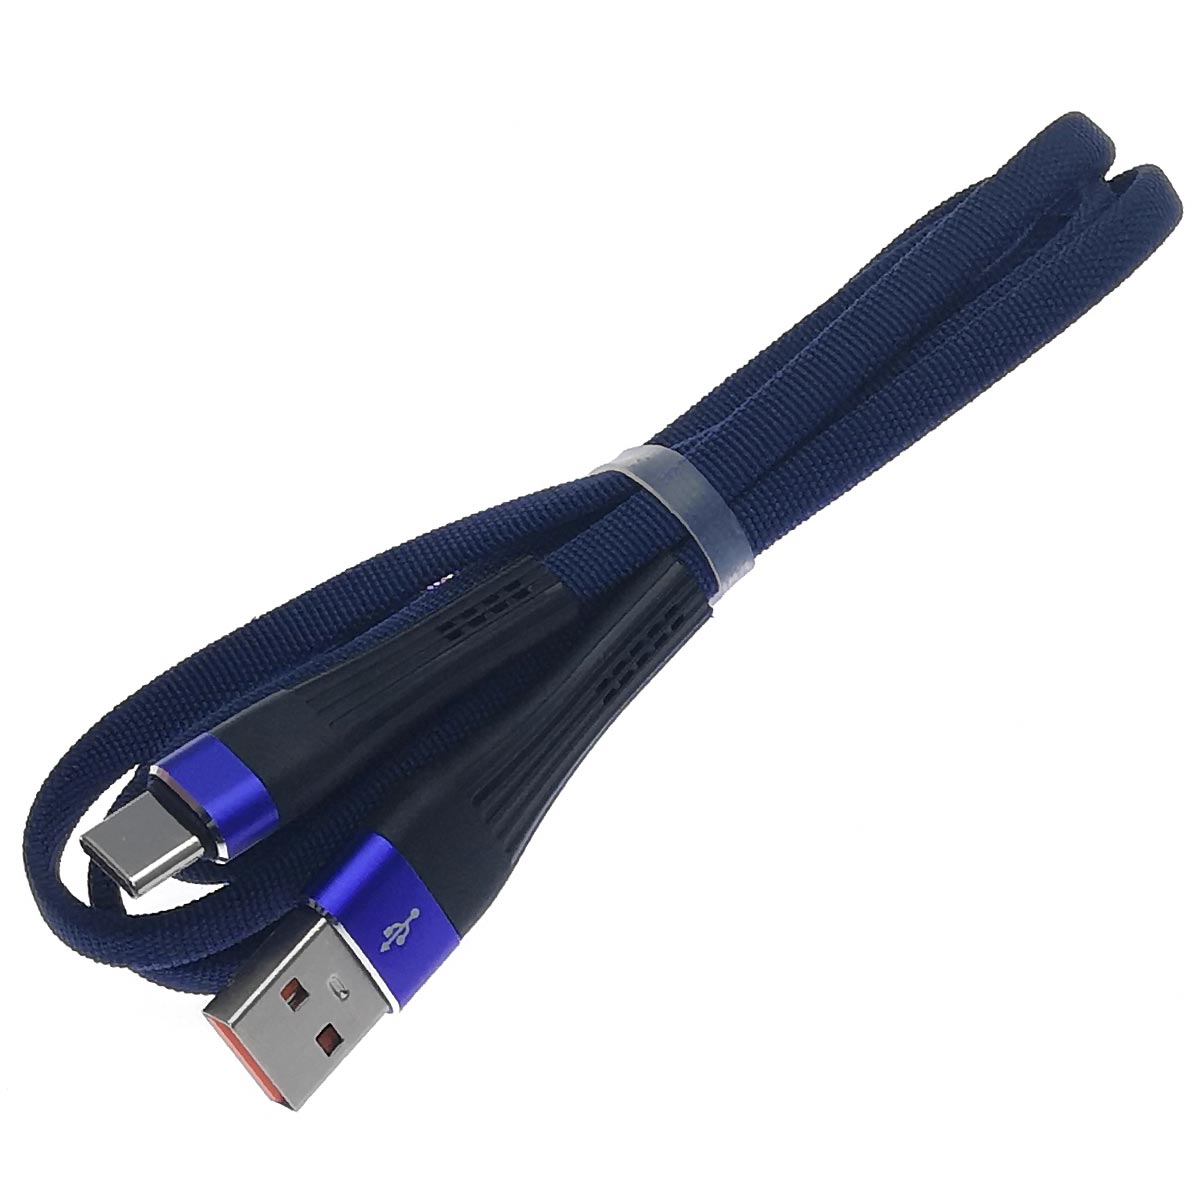 USB Дата кабель MRM MR-30t, Type-C, нейлон, плоский, длина 1 метр, 3.1 A, цвет синий